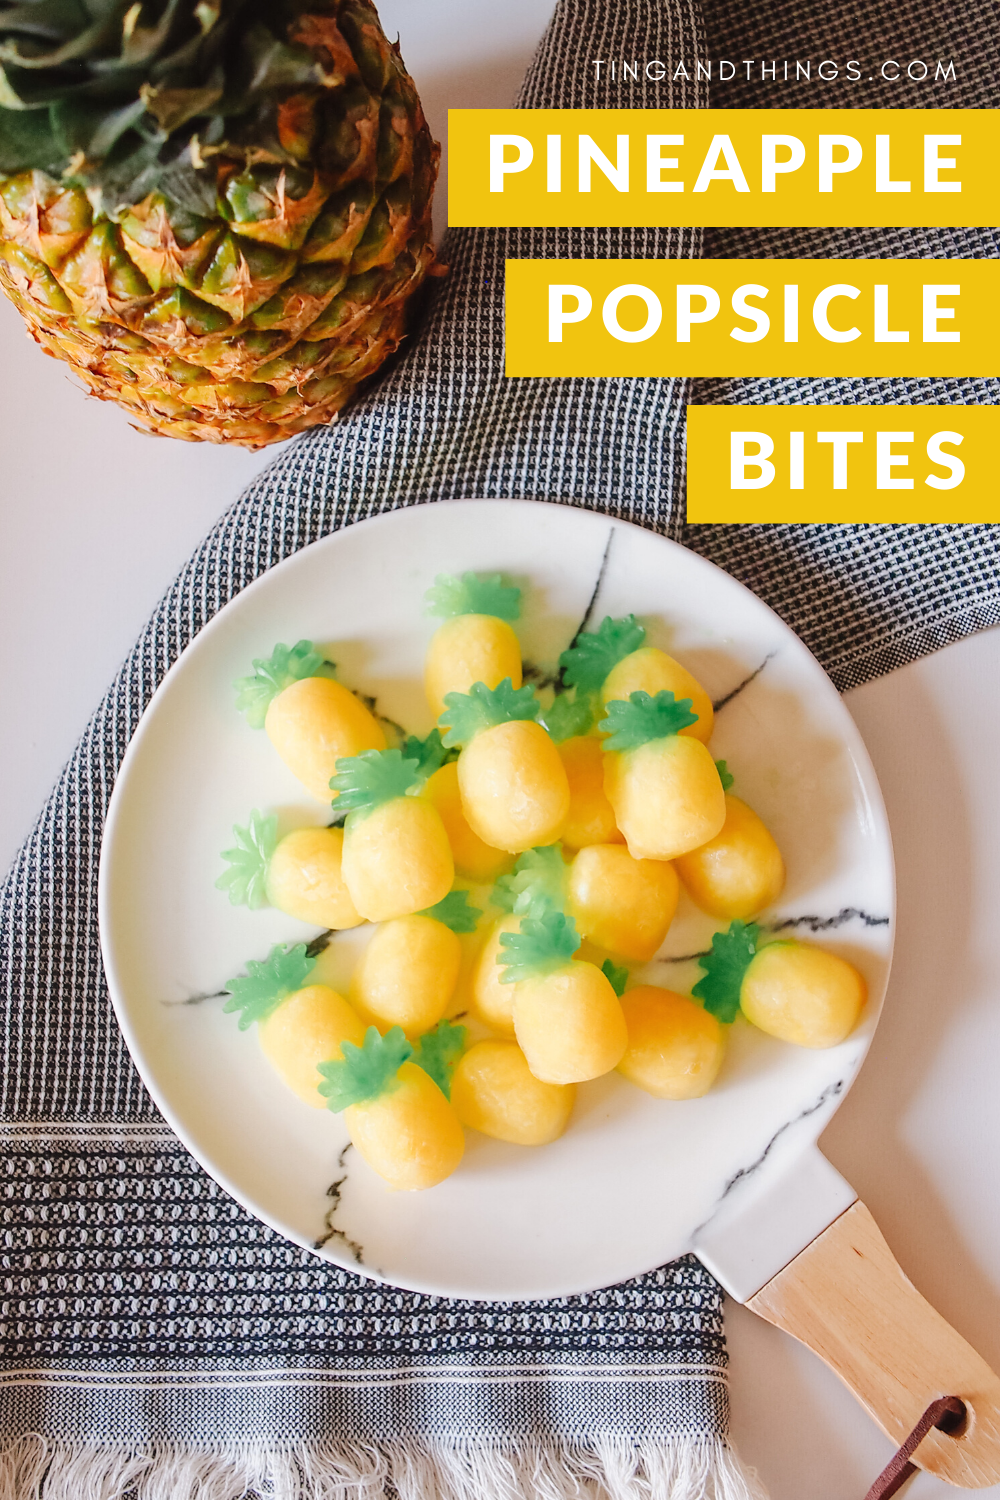 Pineapple popsicle bites tutorial